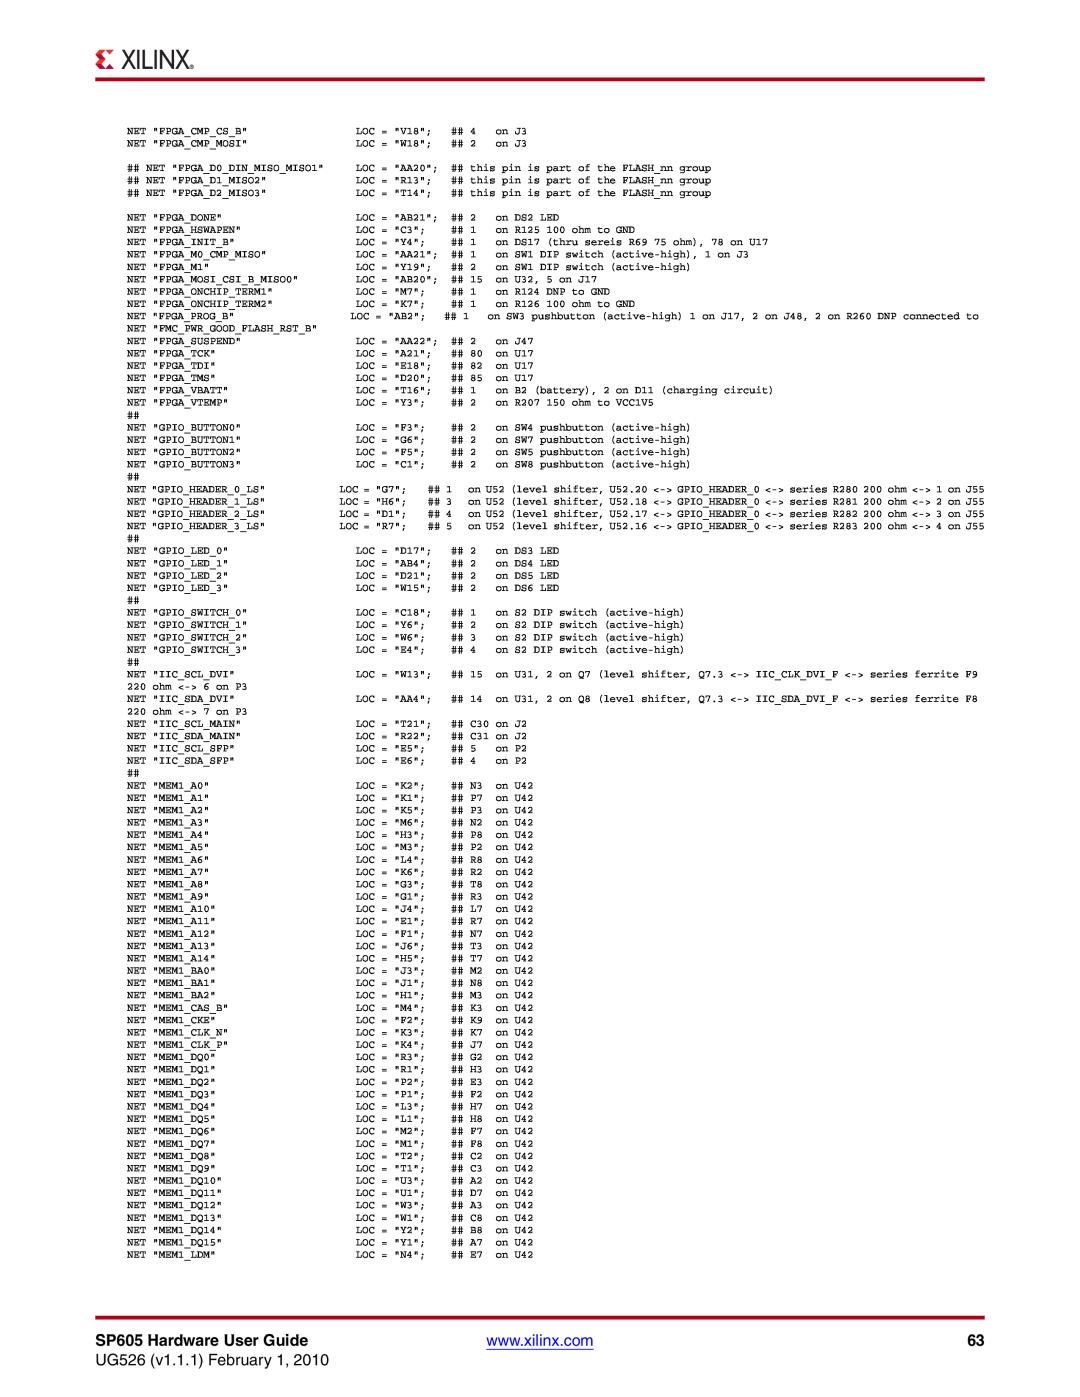 Xilinx SP605 manual UG526 v1.1.1 February 1, LOC = AA20 